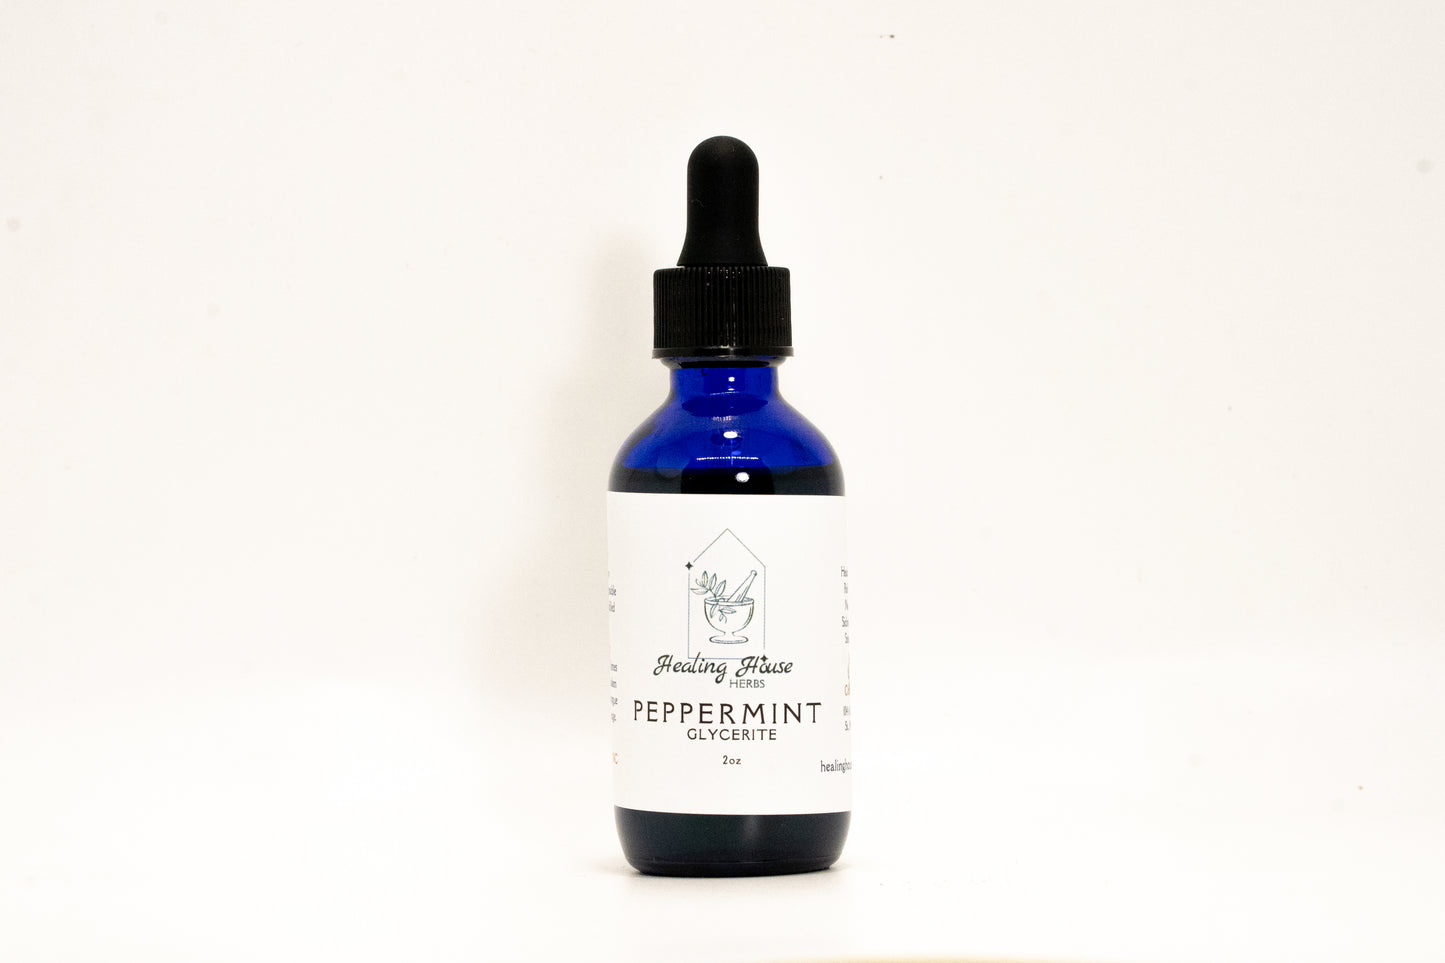 Peppermint Glycerite